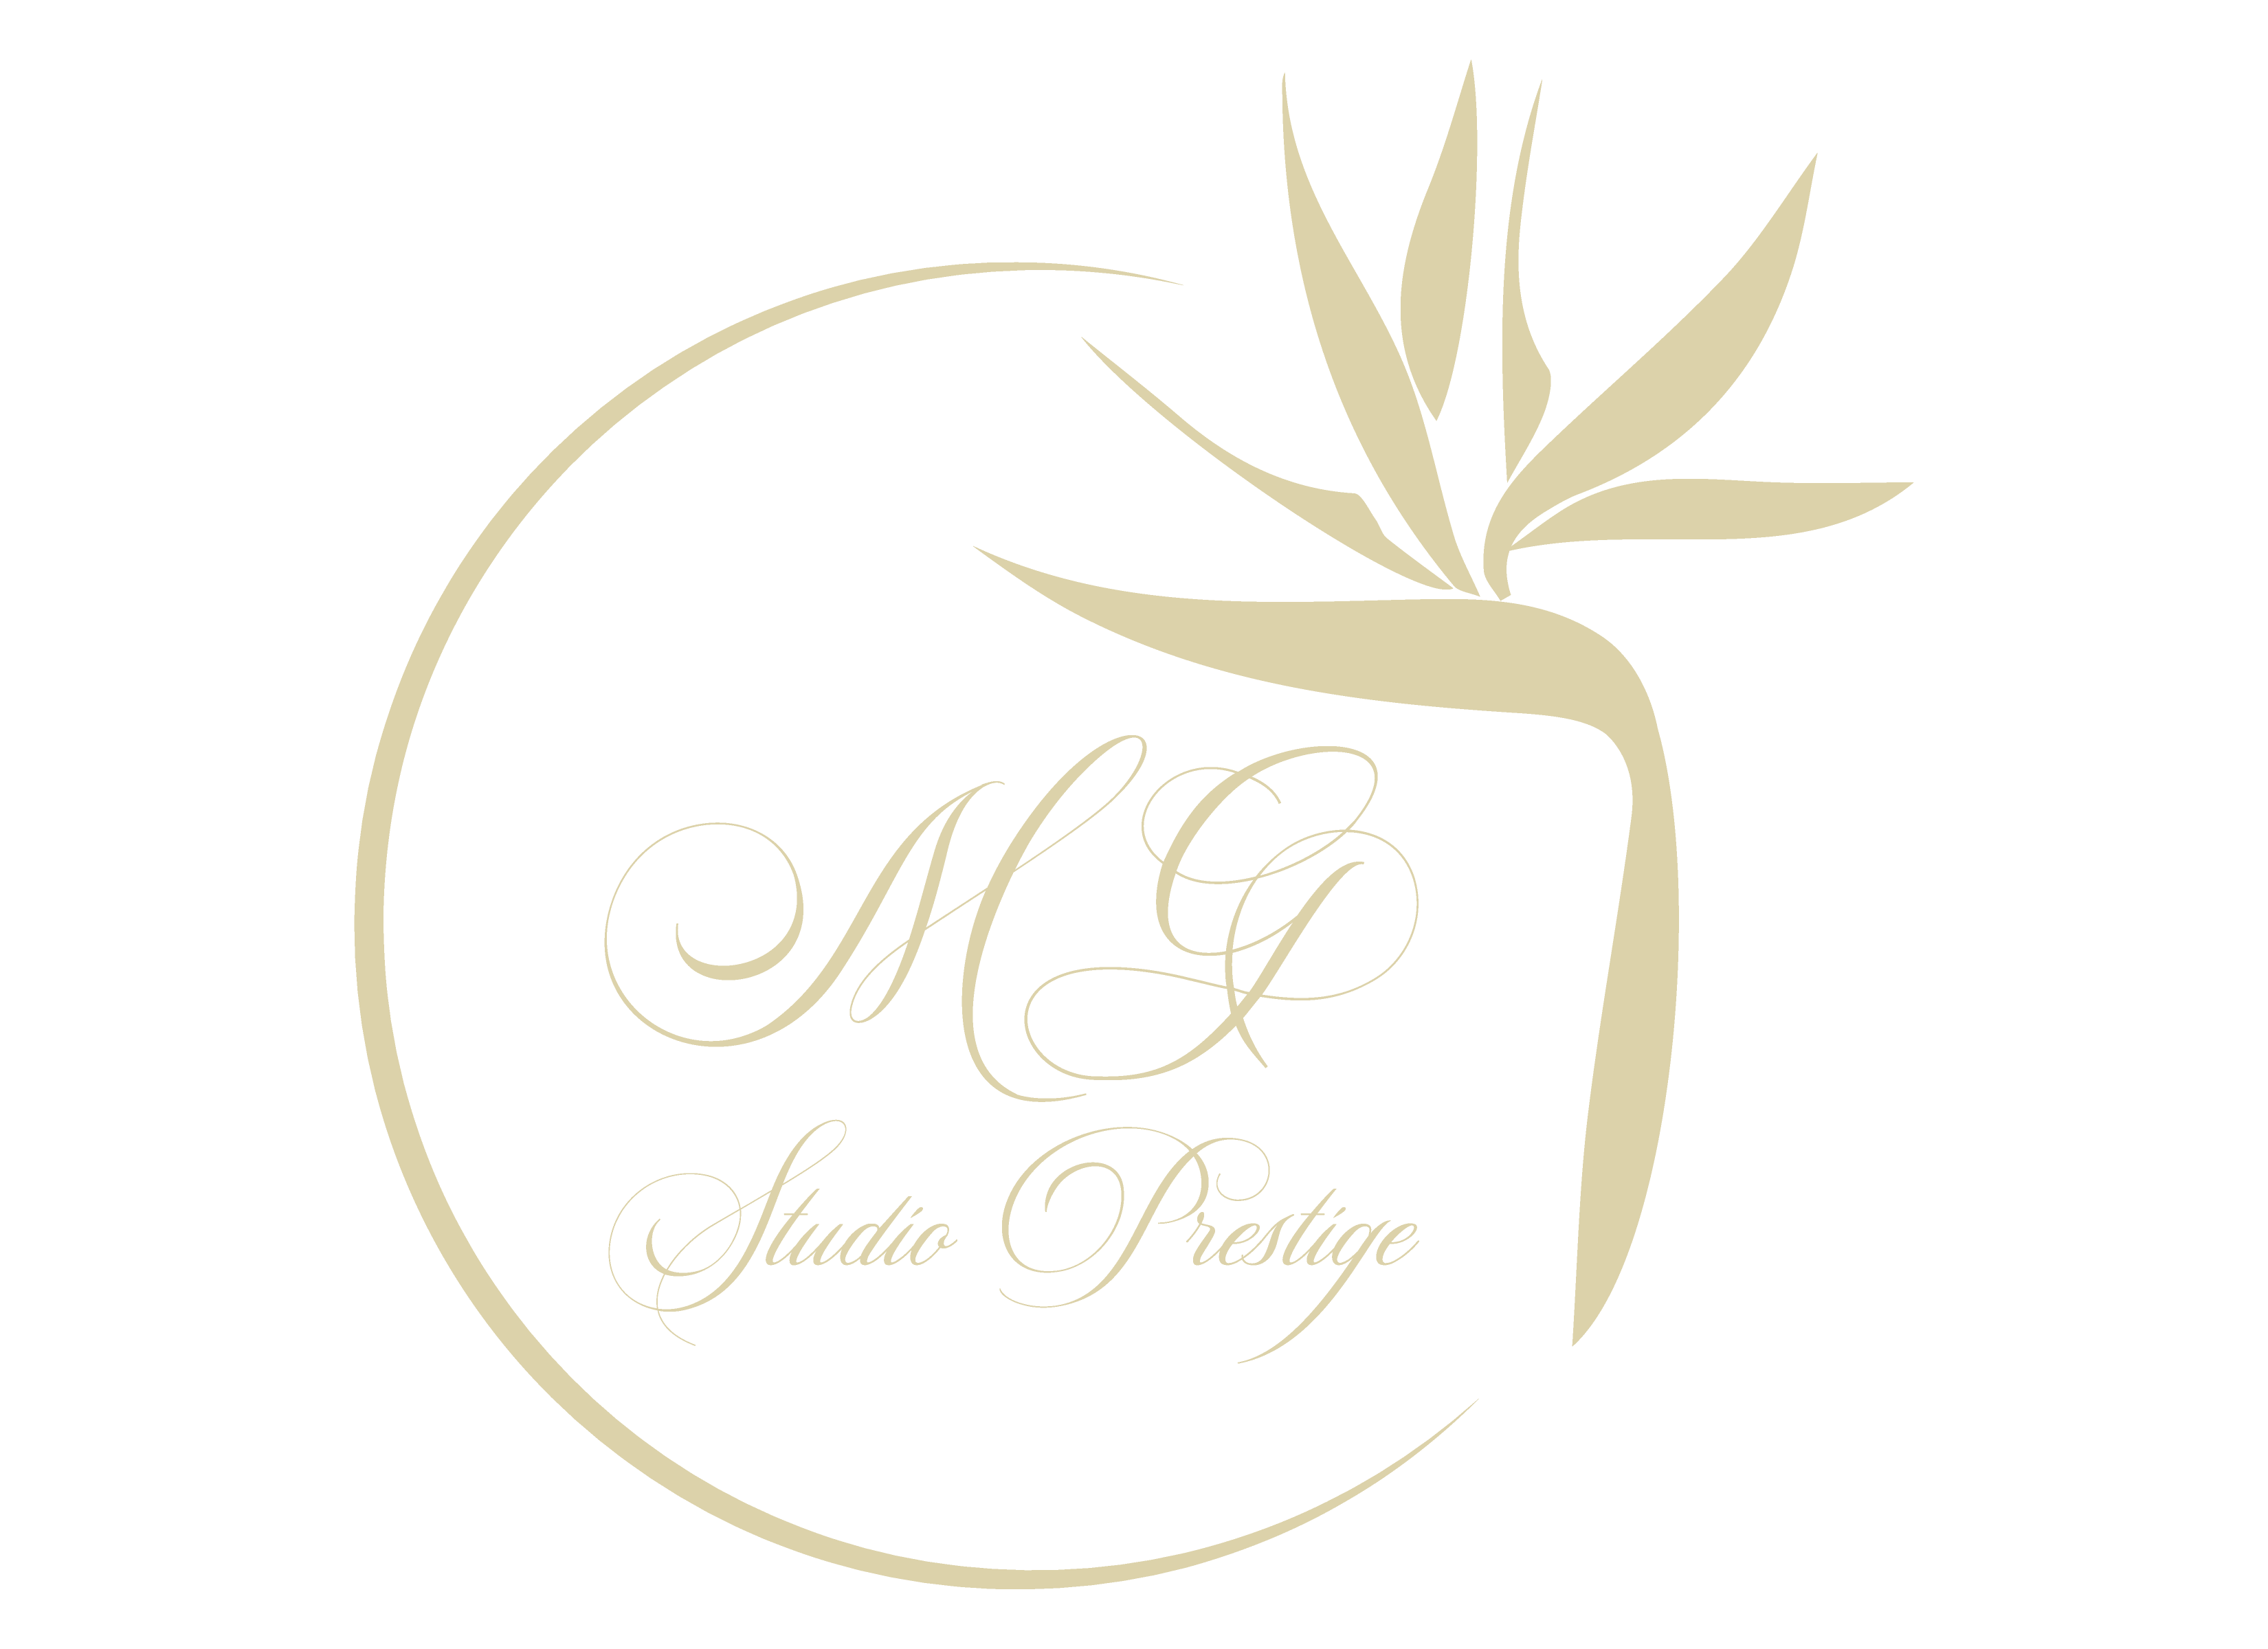 MG STUDIO PRESTIGE Logo